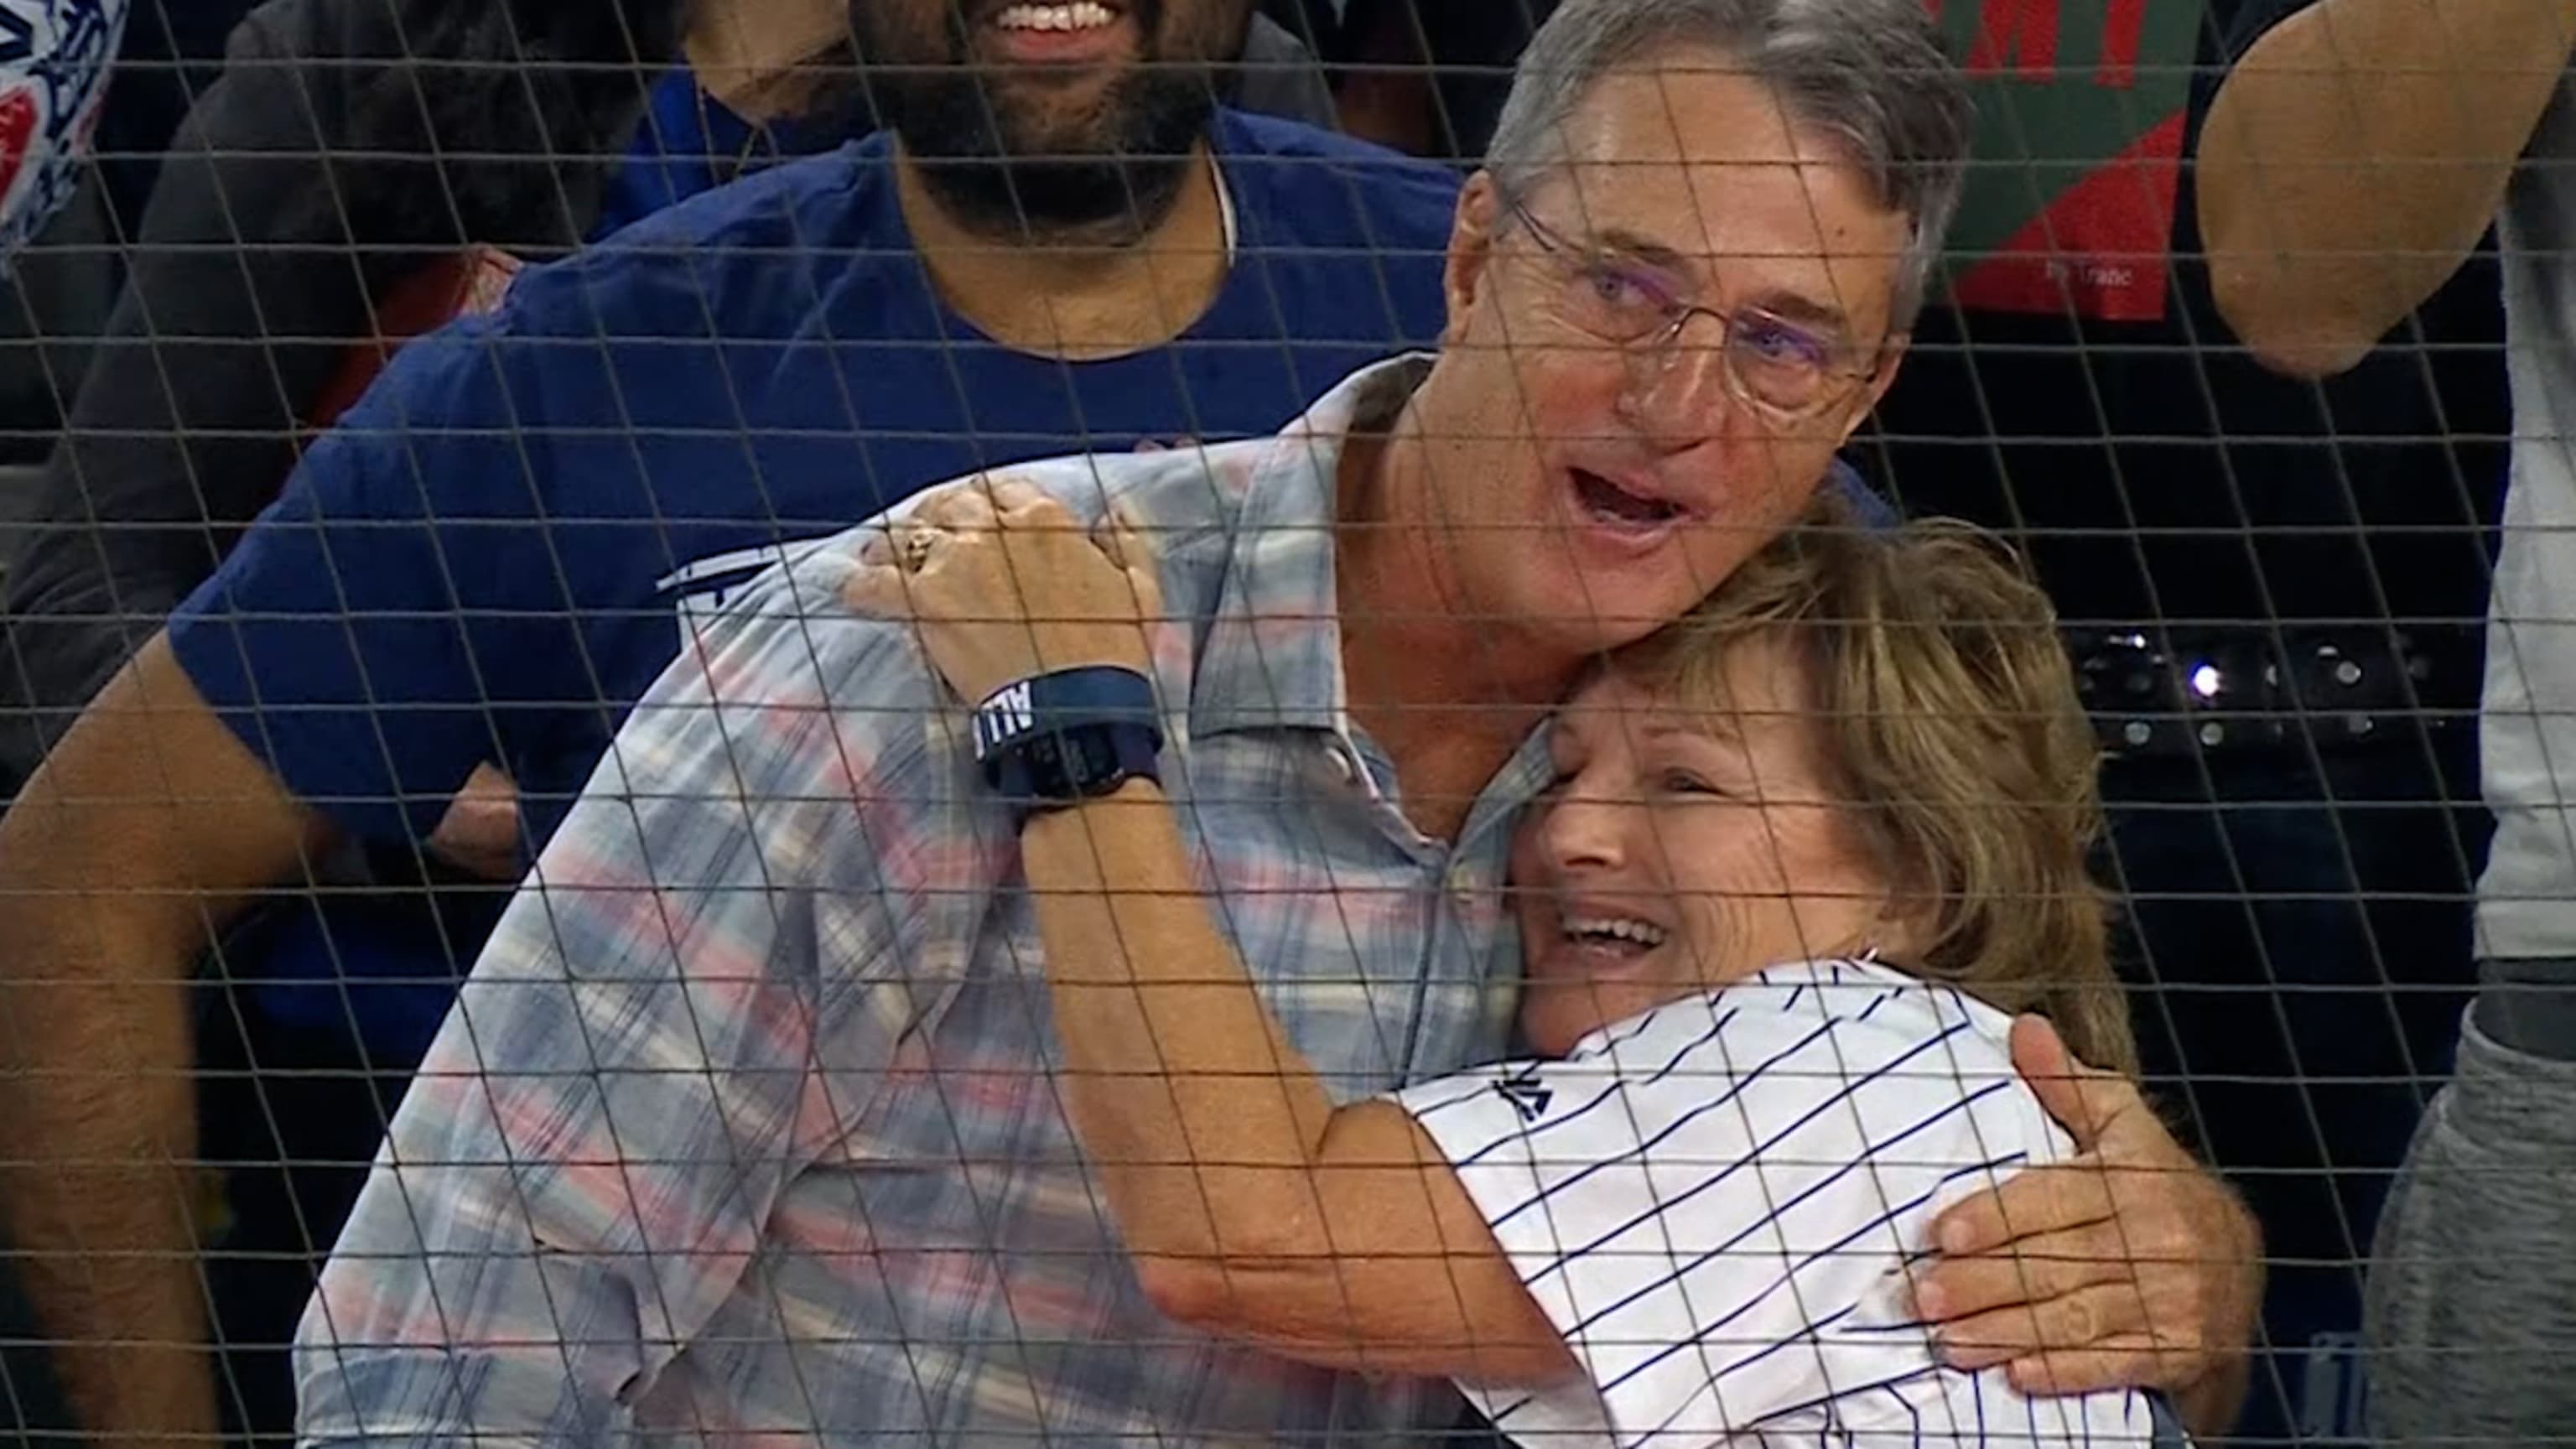 Aaron Judge's mom awestruck by his unreal Yankees season